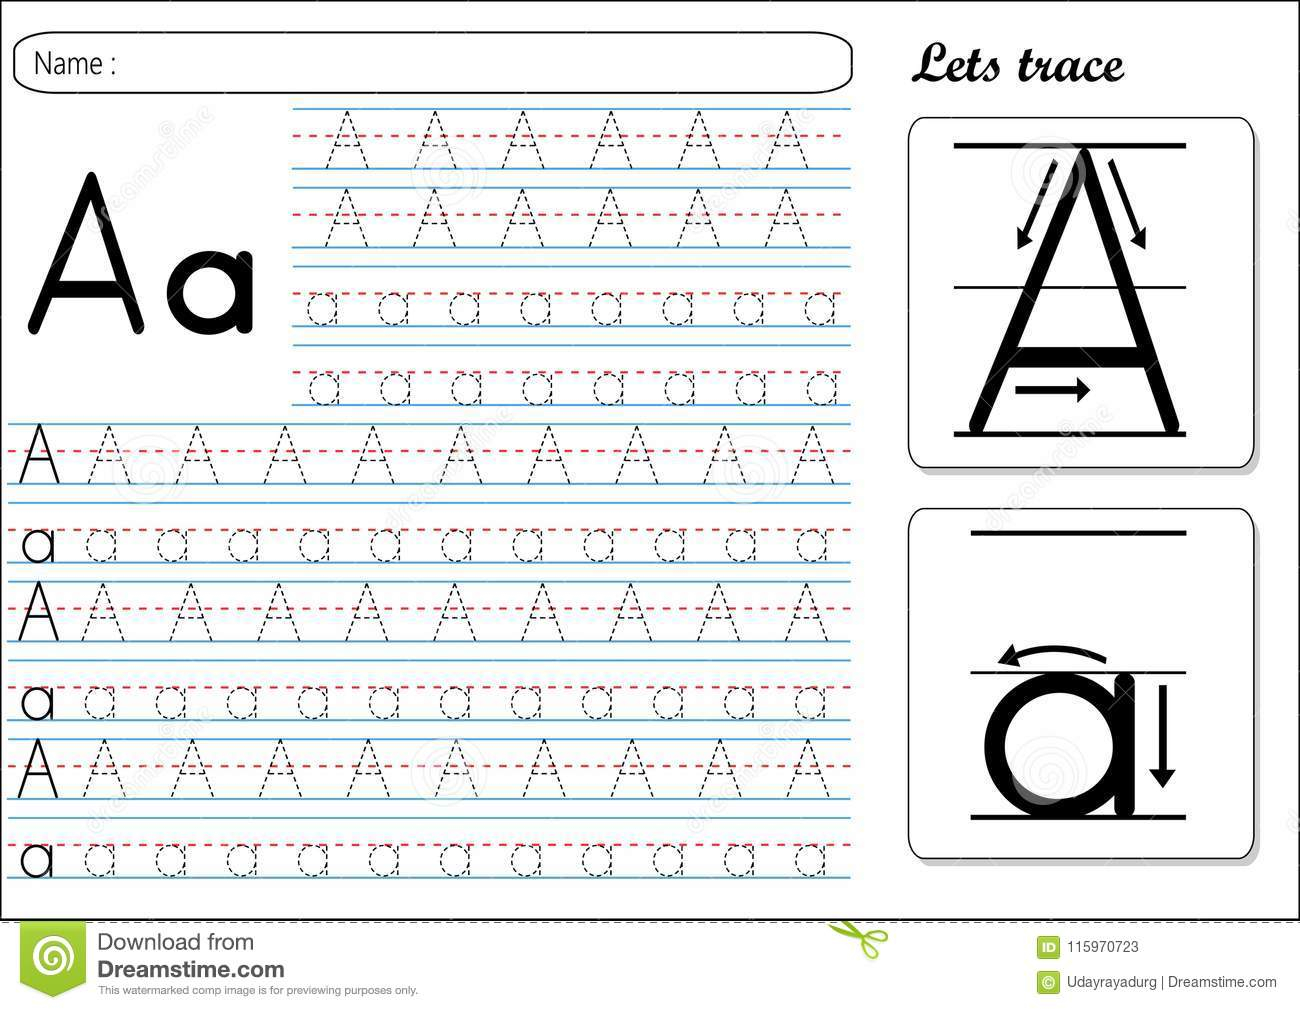 free-beginning-sounds-letter-a-phonics-worksheet-for-preschool-letter-recognition-phonics